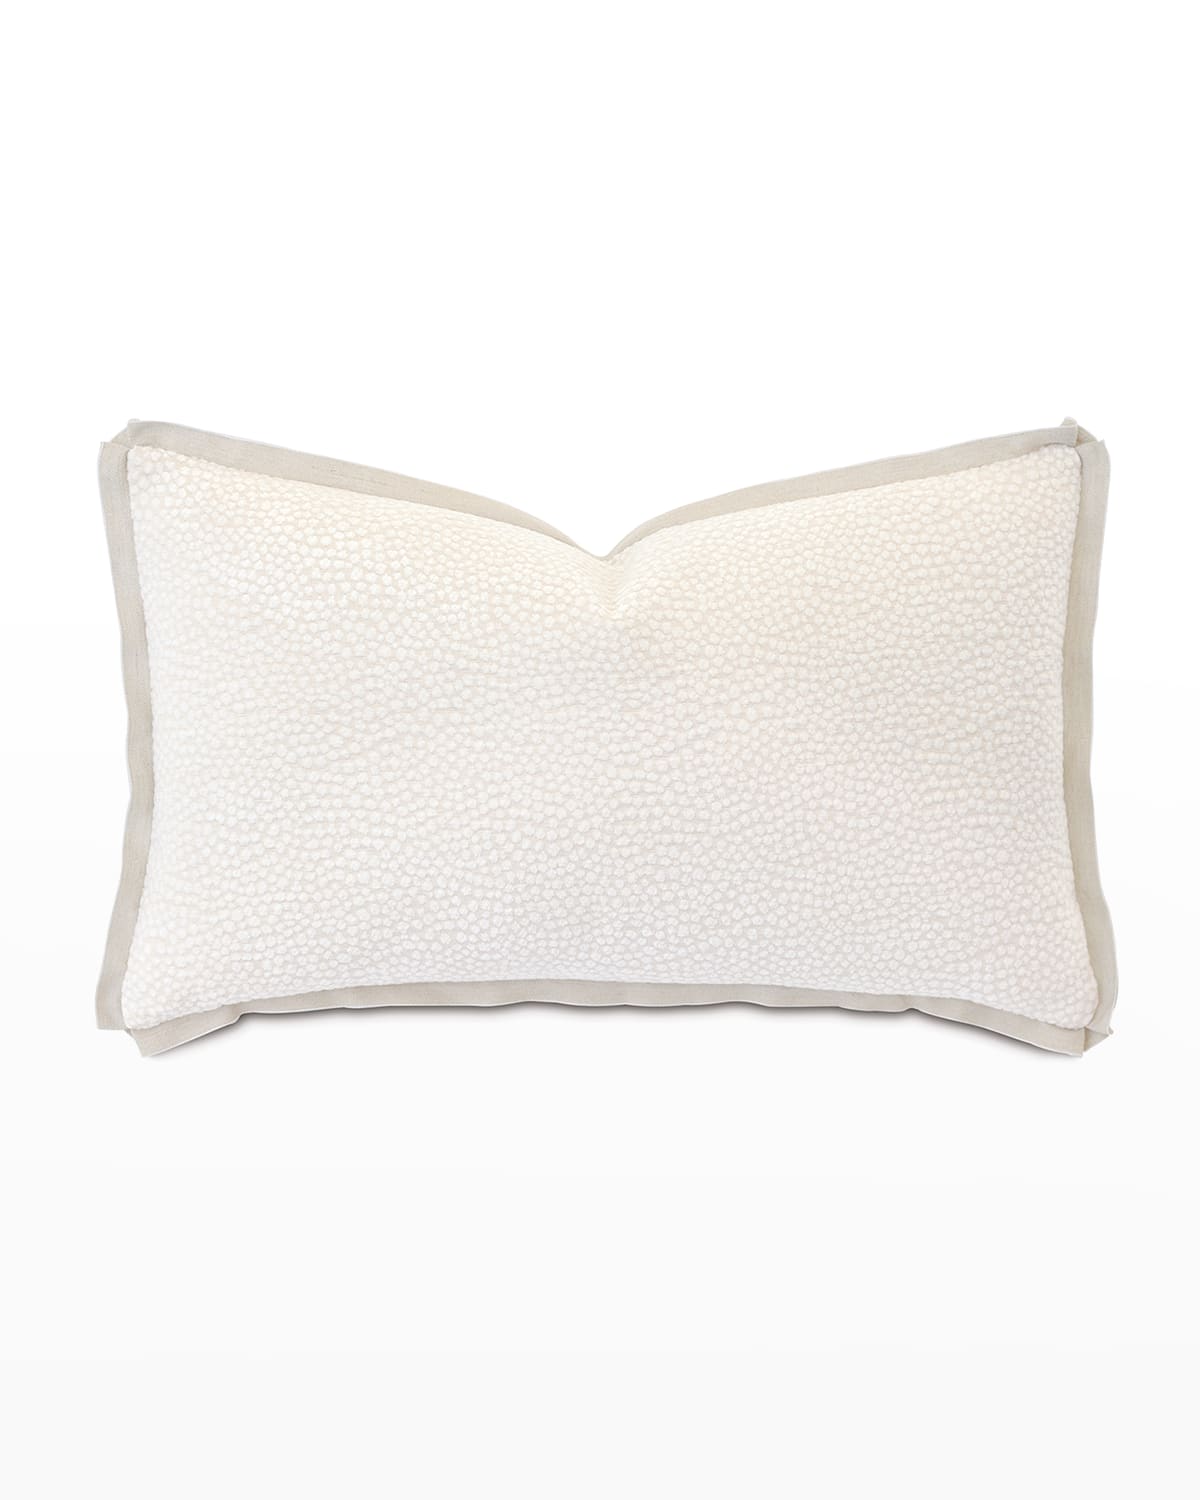 Pallisades Chenille Decorative Pillow, 13" x 22"